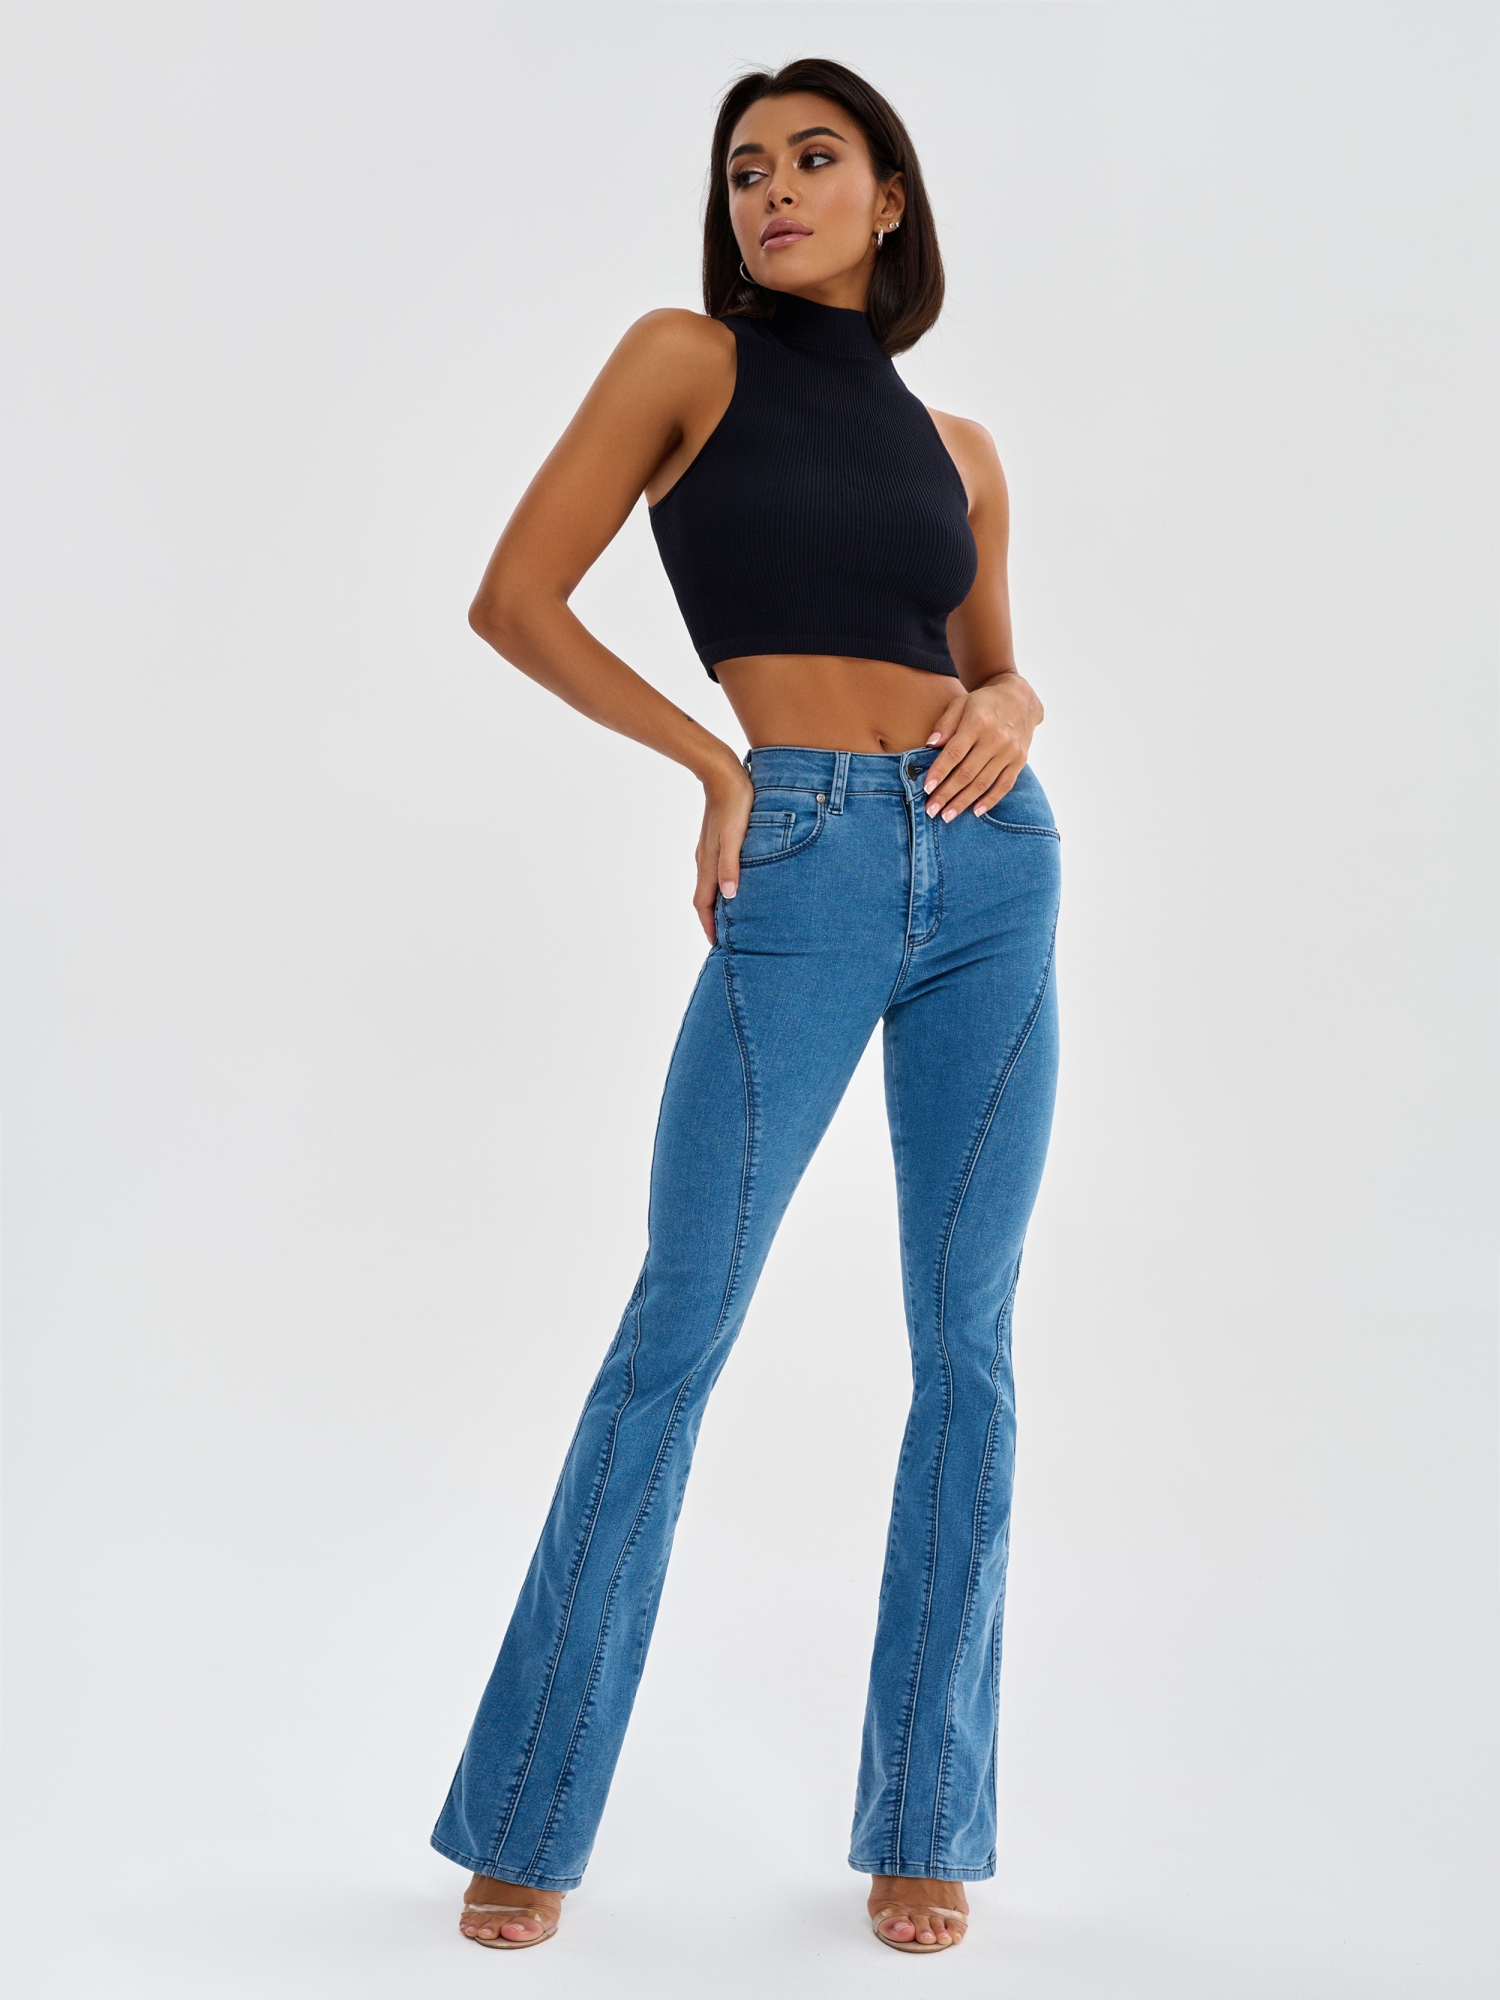 Bona Fashion: Jeans Booty Up "Light Blue" фото 15